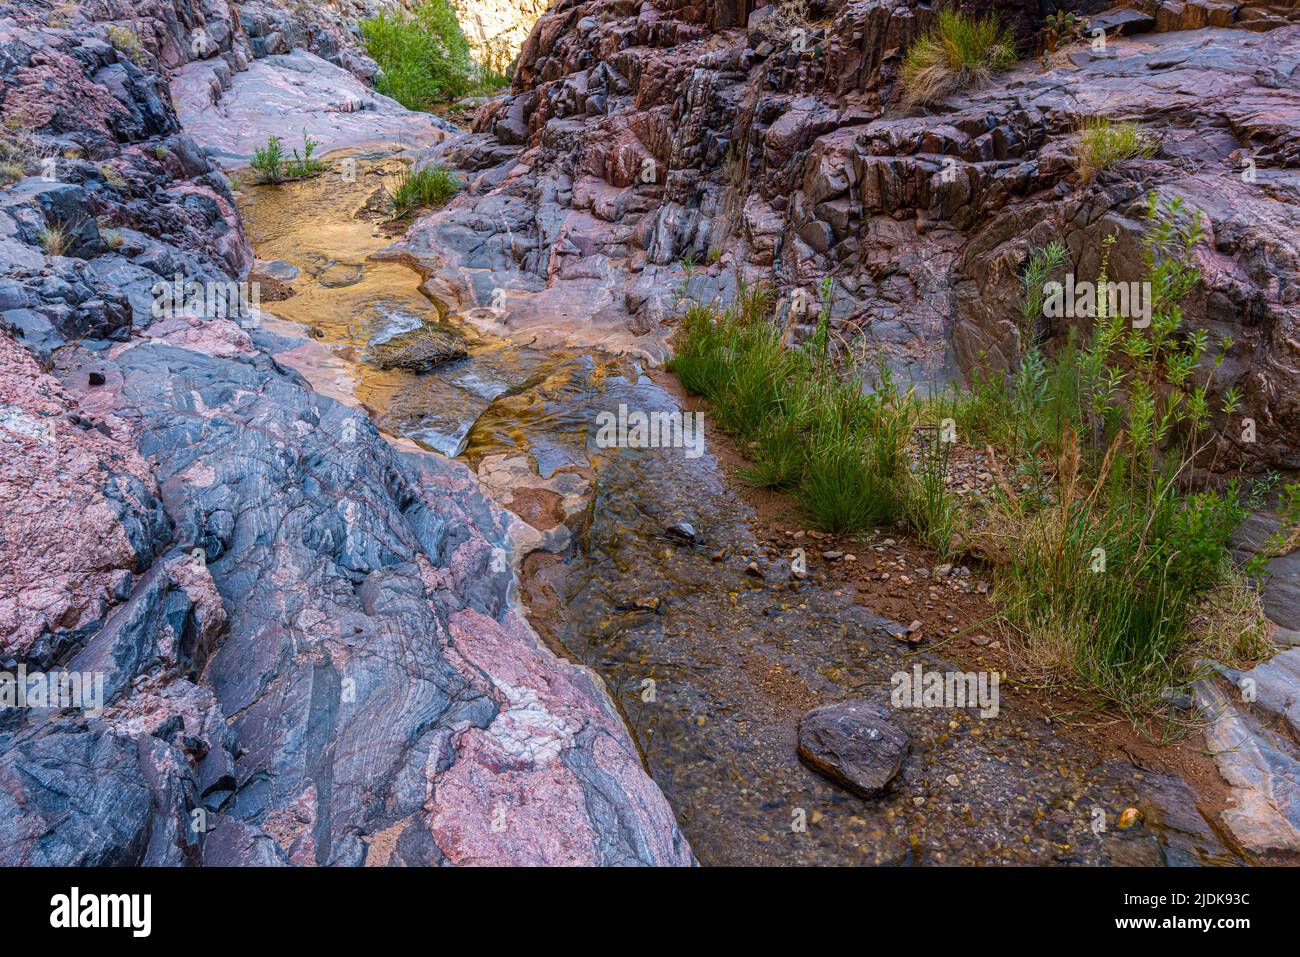 Pipe Creek Cascades Over Vishnu Schist Basement Rock, River Trail, Grand Canyon National Park, Arizona, USA Stock Photo